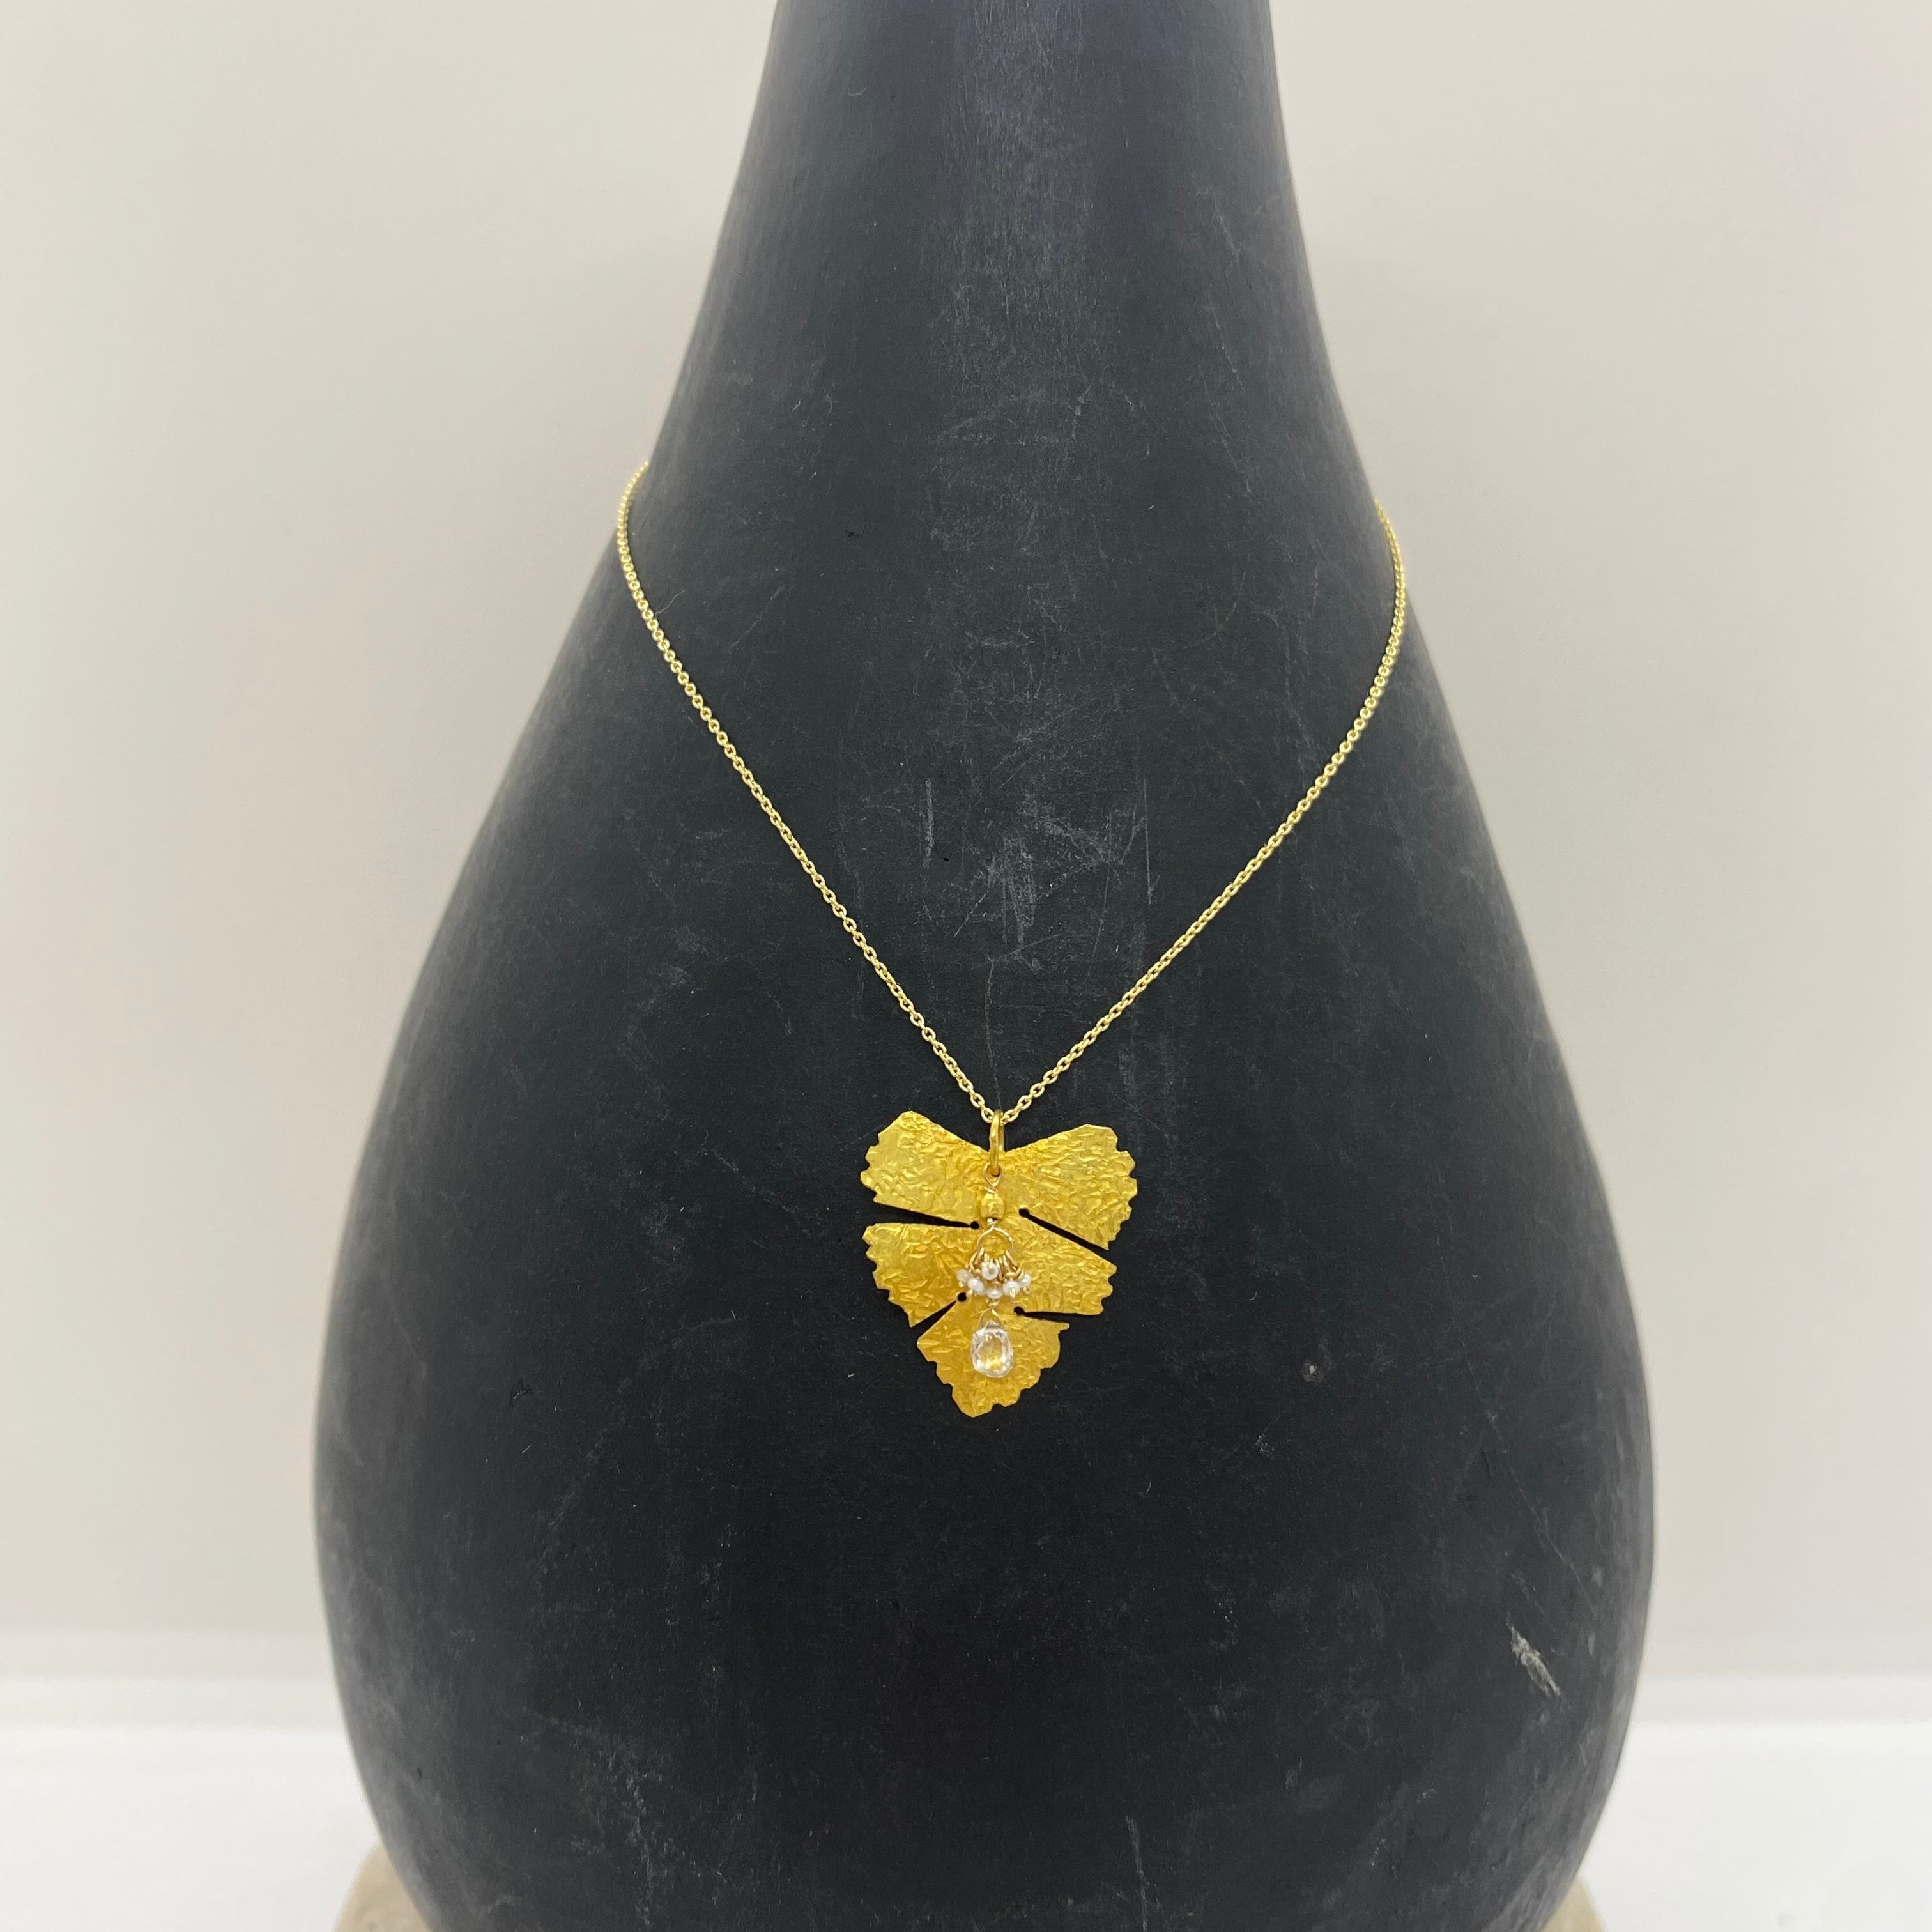 14k Gold Chain Necklace w/ Hand-Cut 18k Gold Leaf Pendant, Diamond, 18k Gold Nugget & Antique Italian Beads